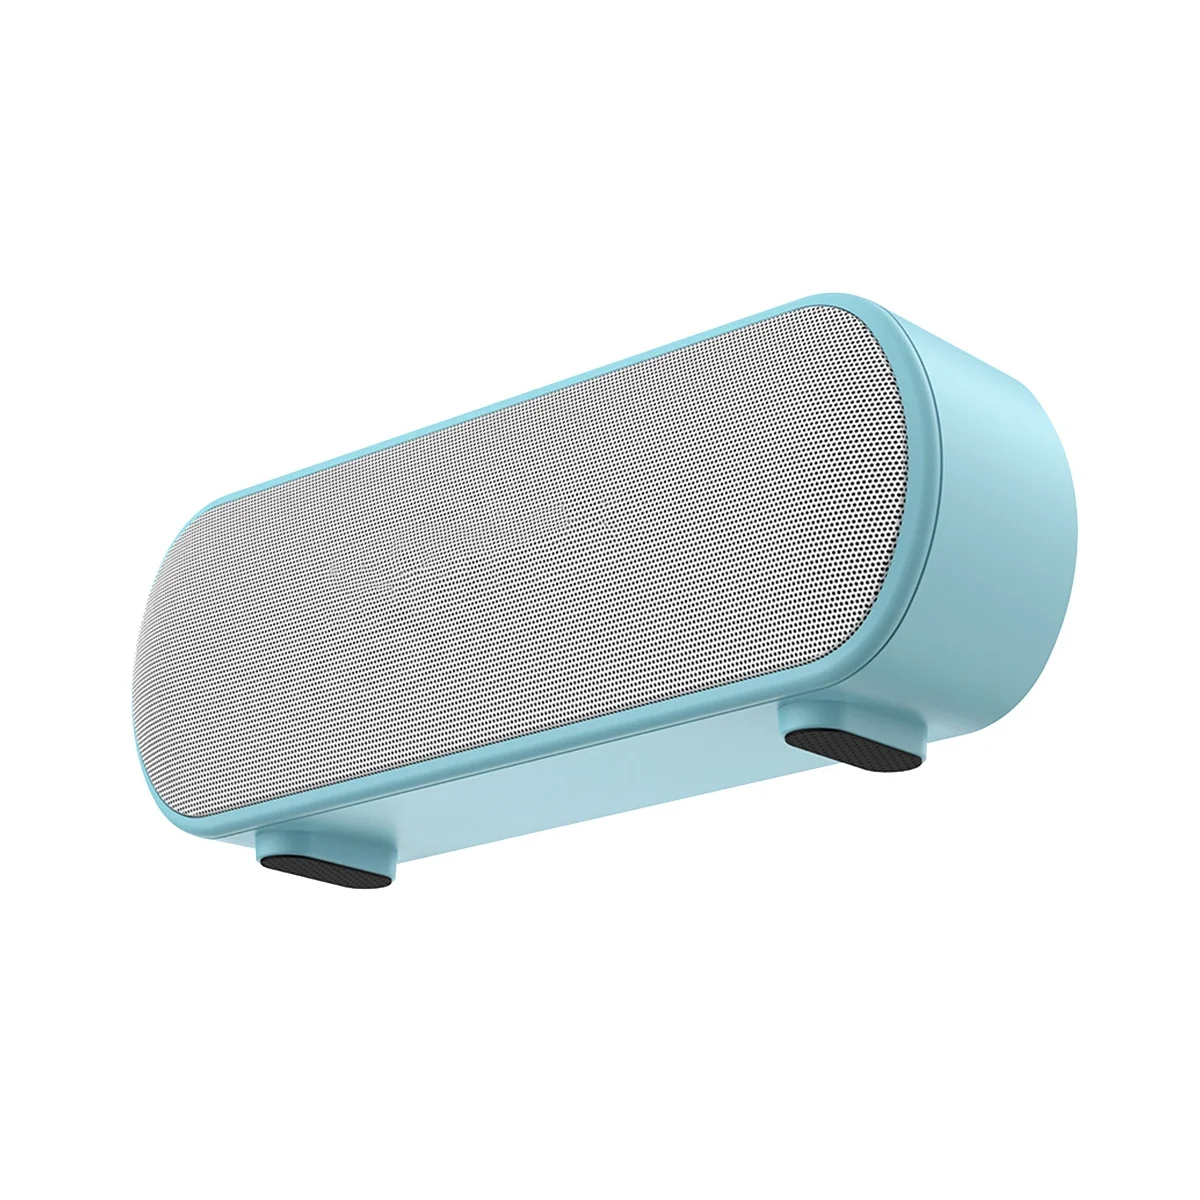 

Ezcap221 аудио Захват карты коробка Bluetooth динамик мини MP3-плеер для ПК телефона музыка запись видео и аудио To TF